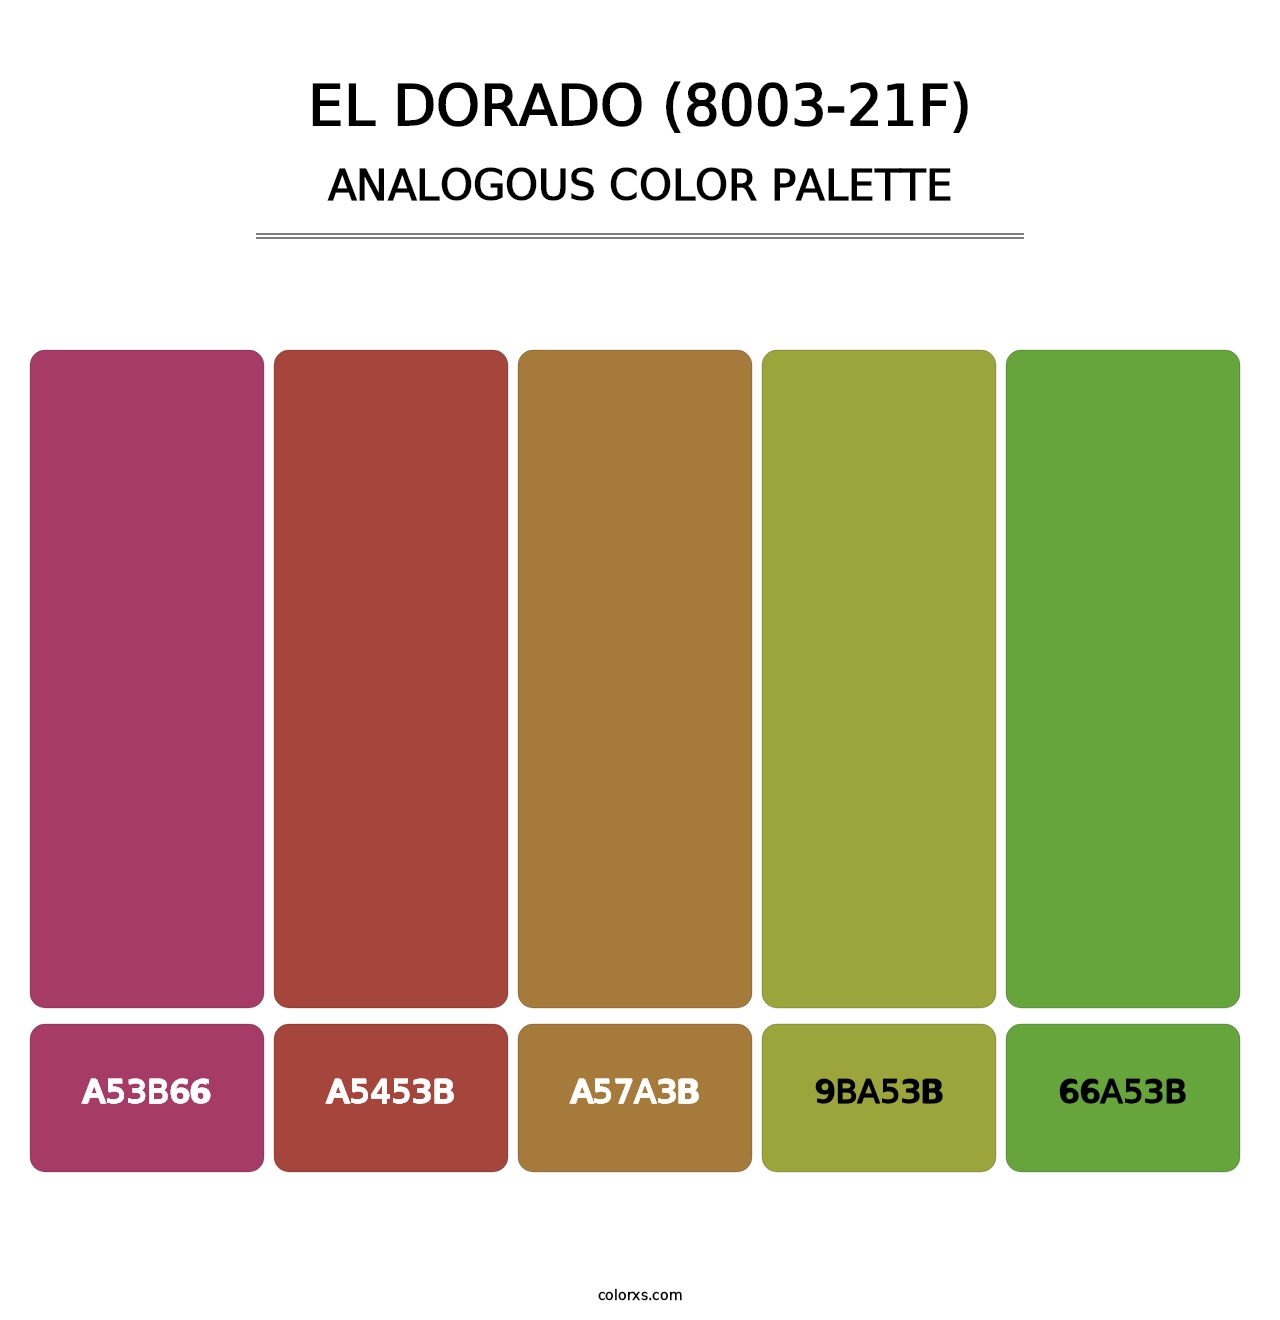 El Dorado (8003-21F) - Analogous Color Palette